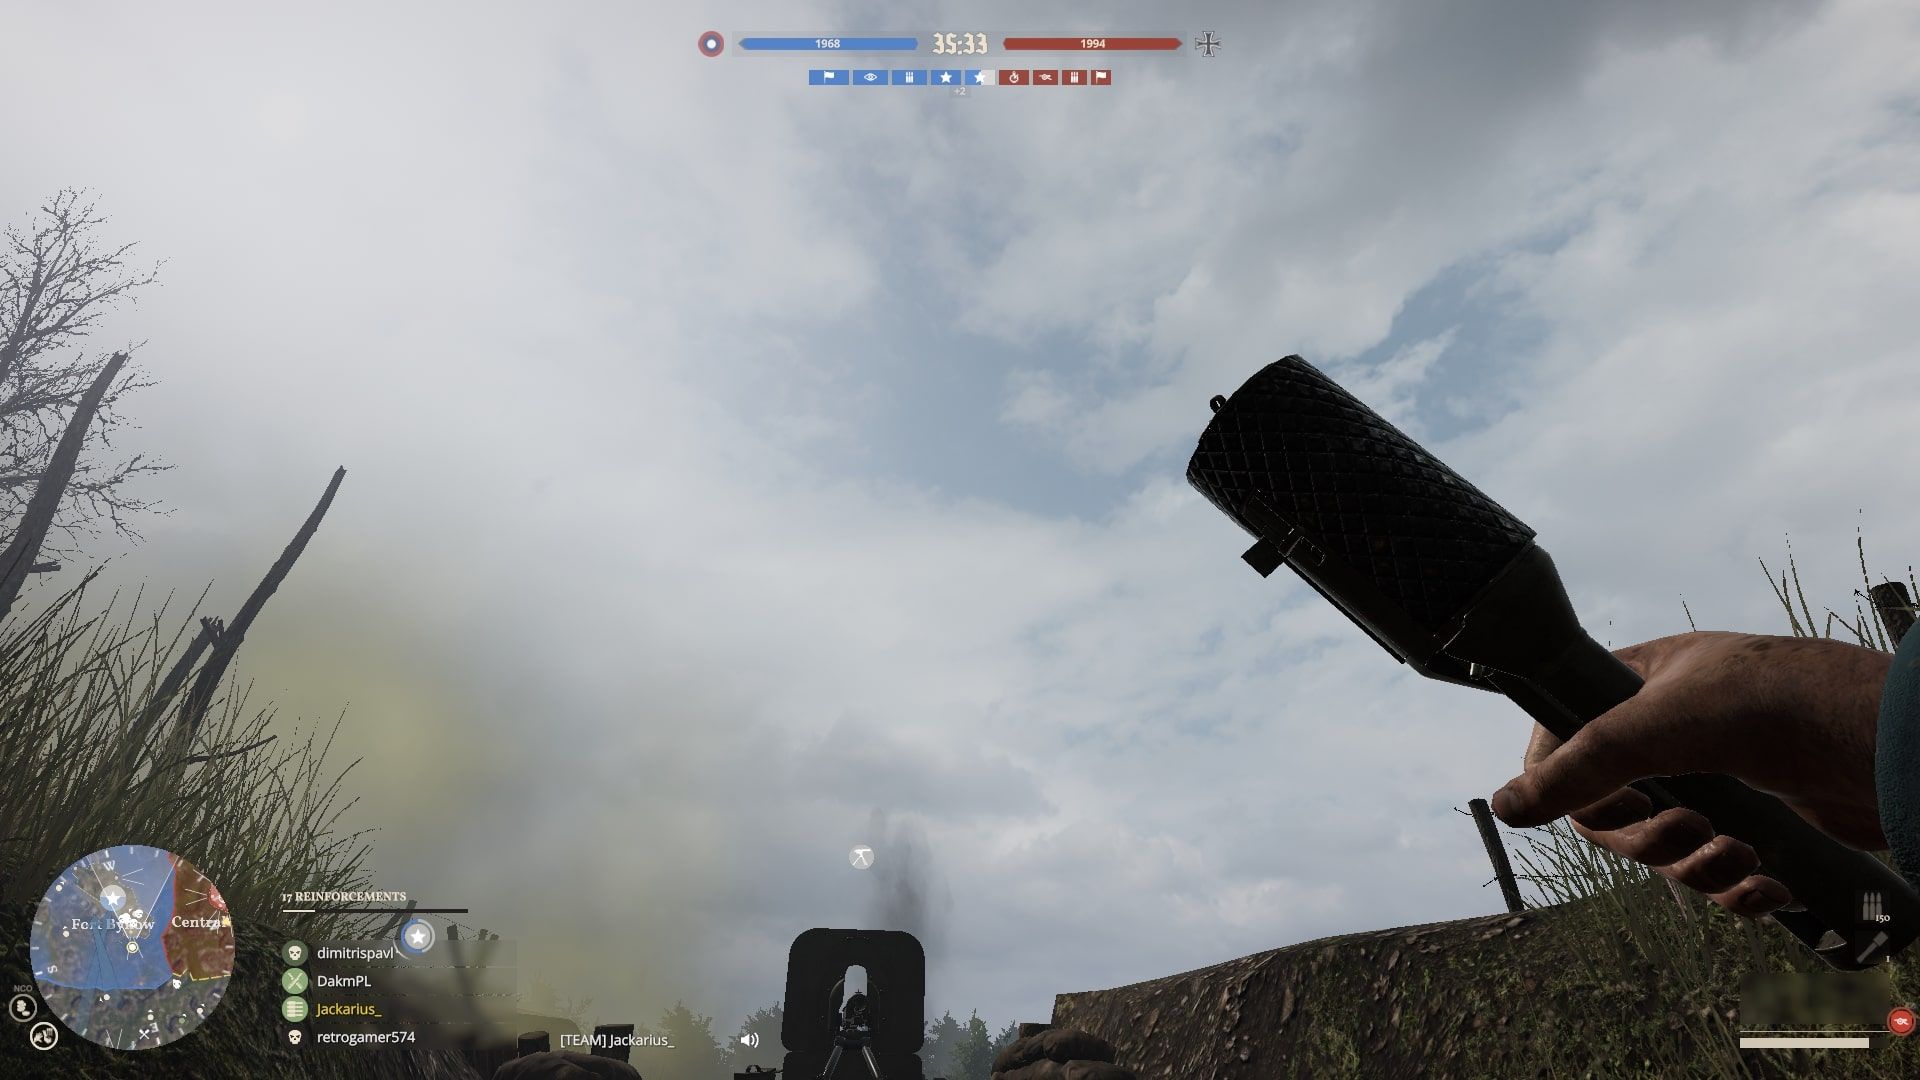 Tannenberg Lobbing A Grenade With Heavy Machine Gun And Gas In Background